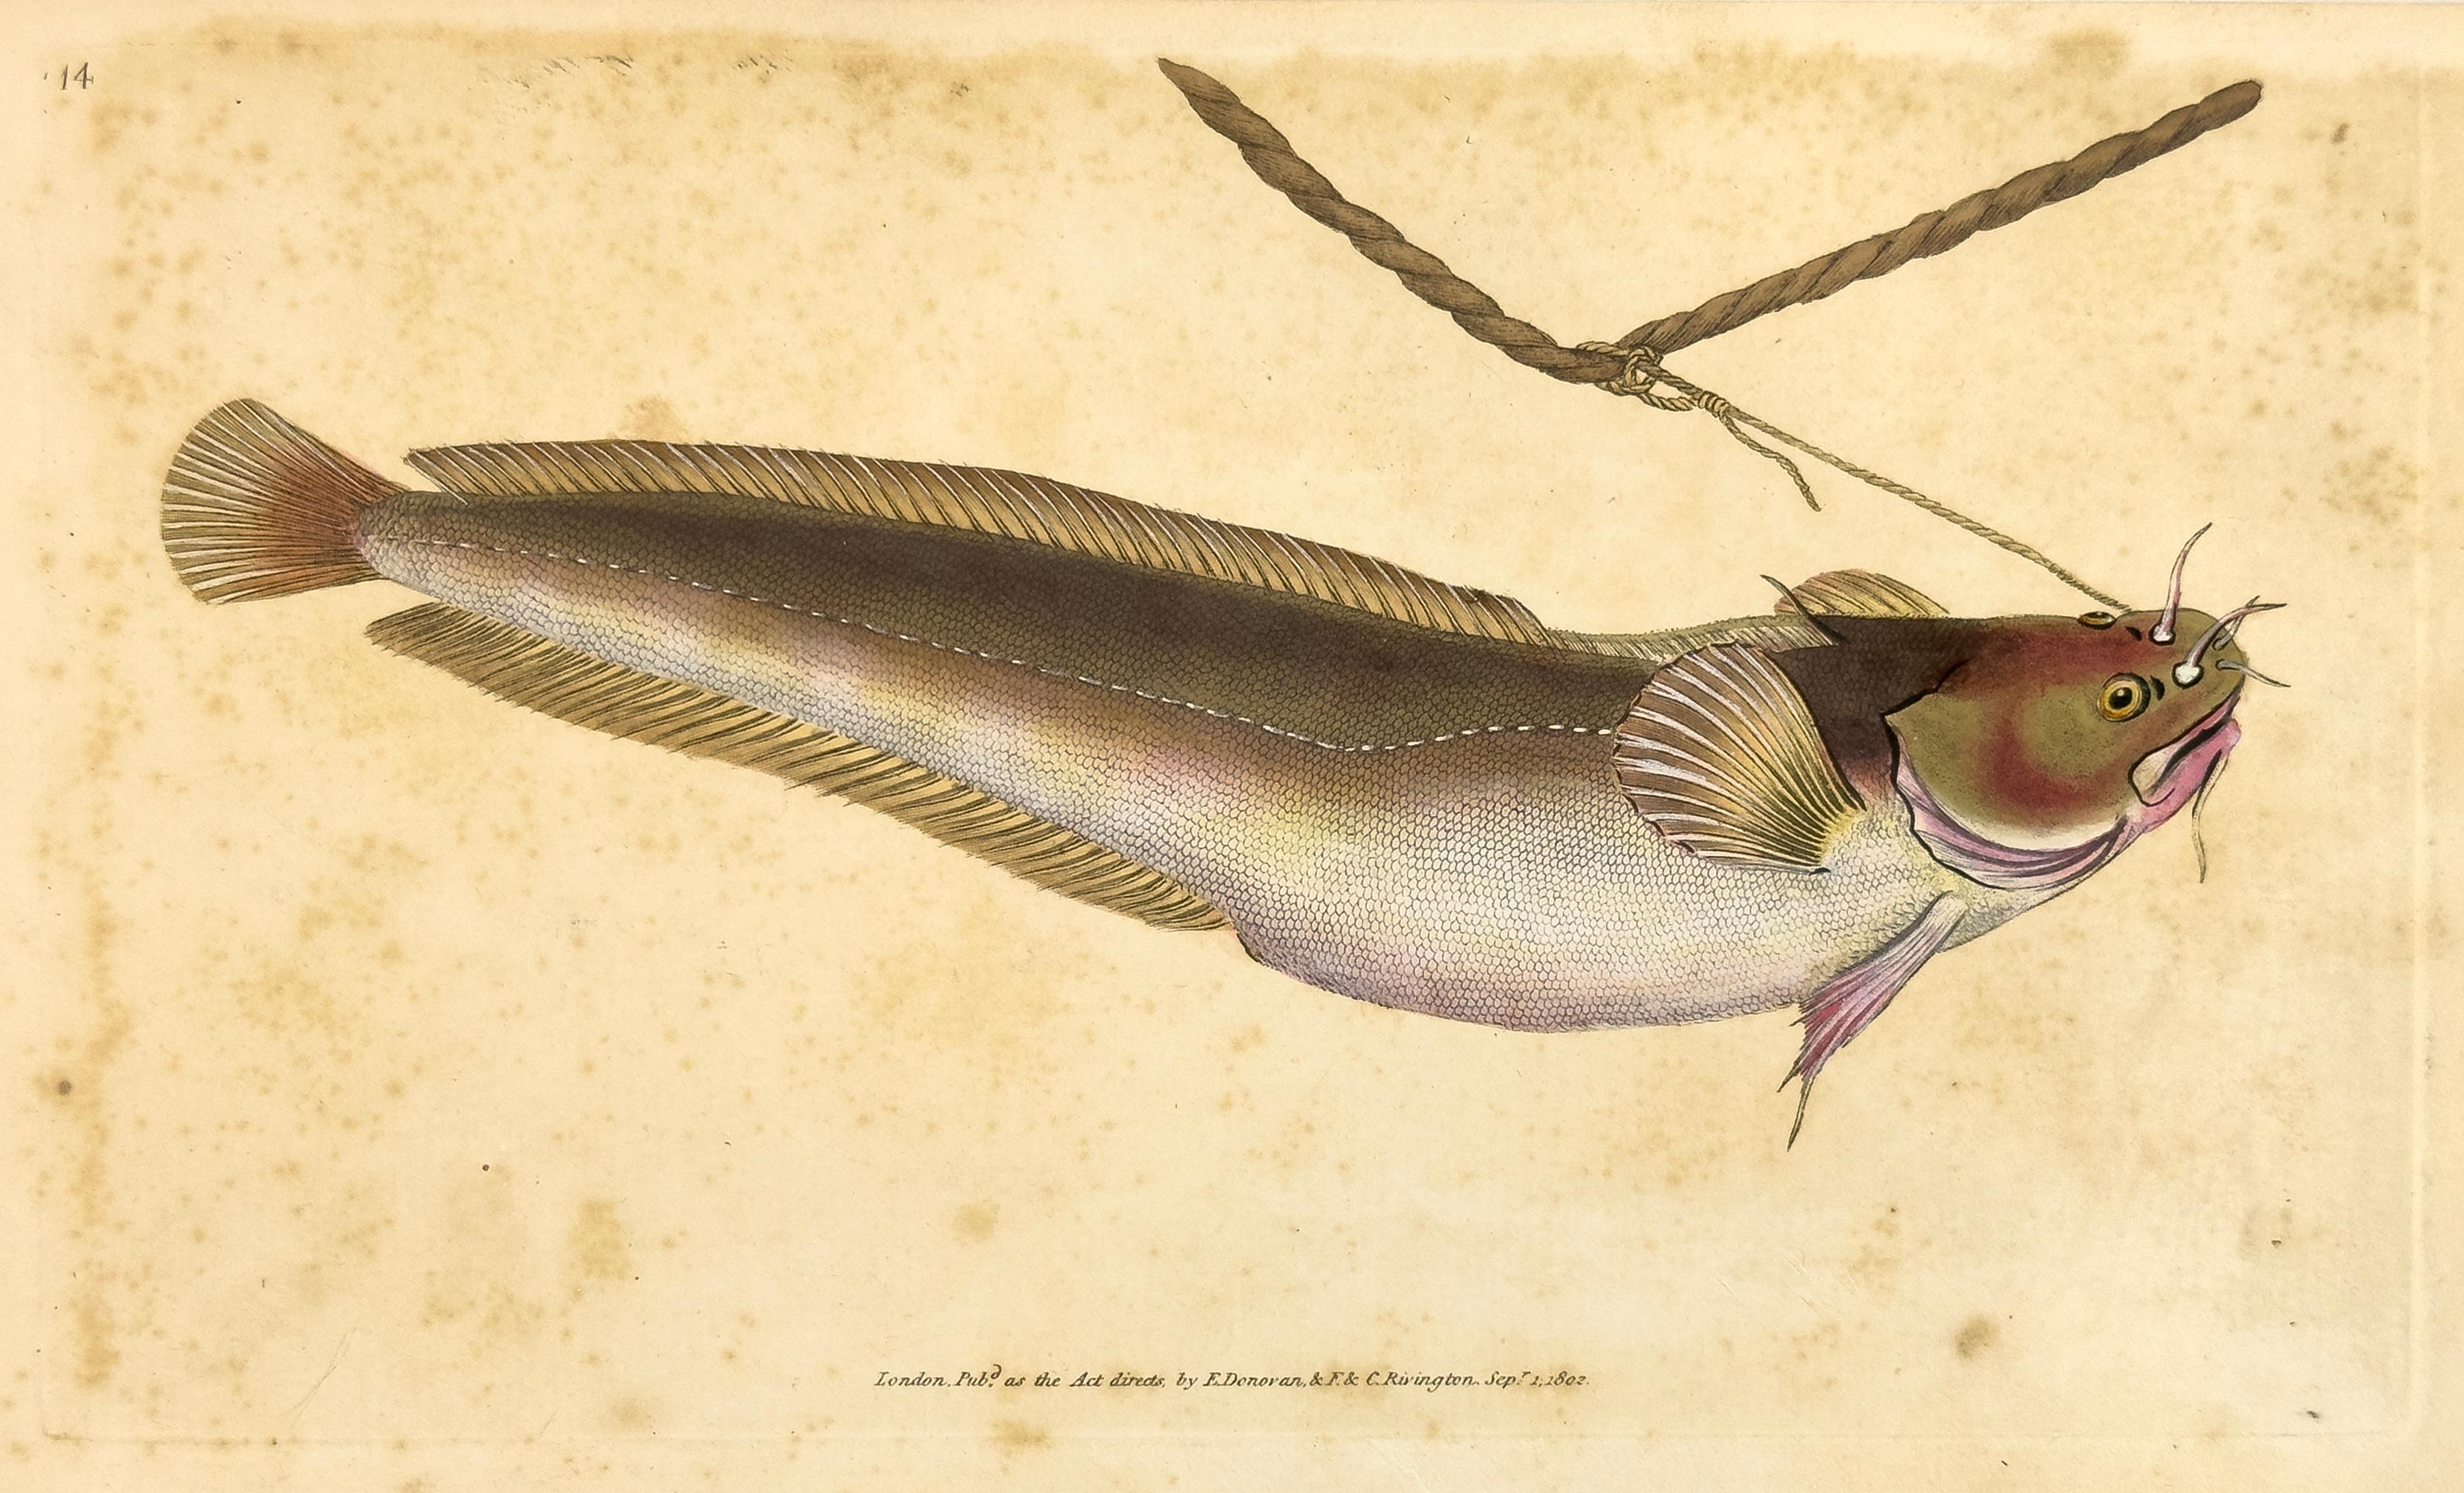 Edward Donovan Print - 14: Gadus mustela, Five Bearded Cod Fish